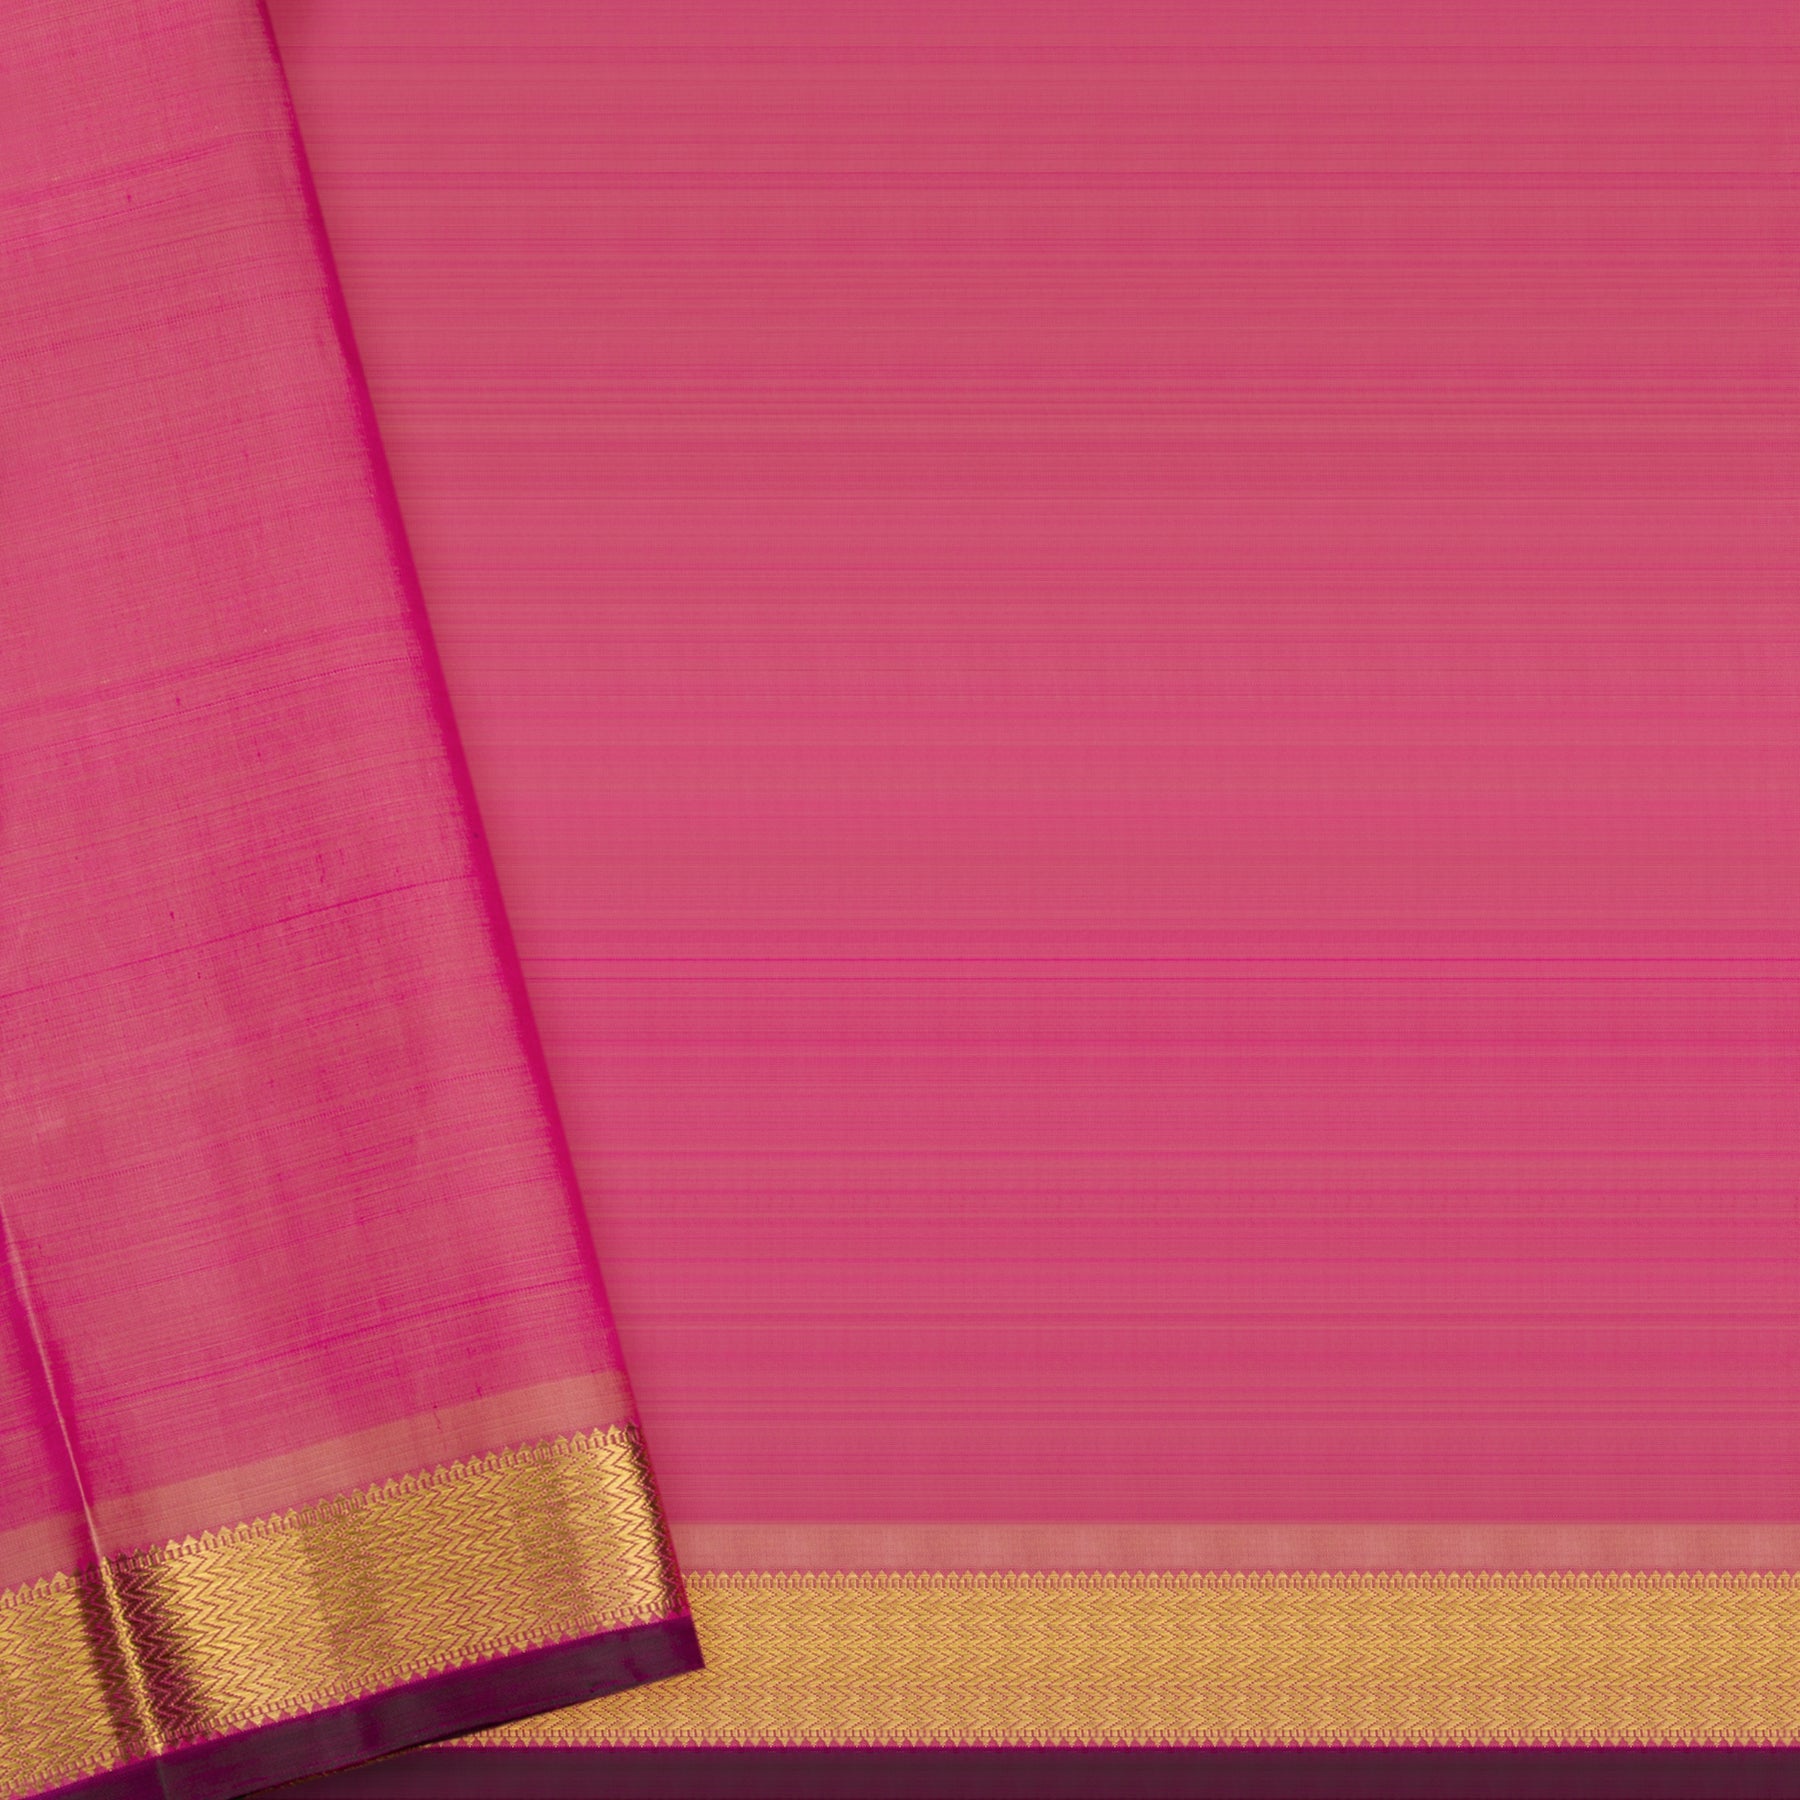 Kanakavalli Kanjivaram Silk Sari 23-599-HS001-14398 - Blouse View